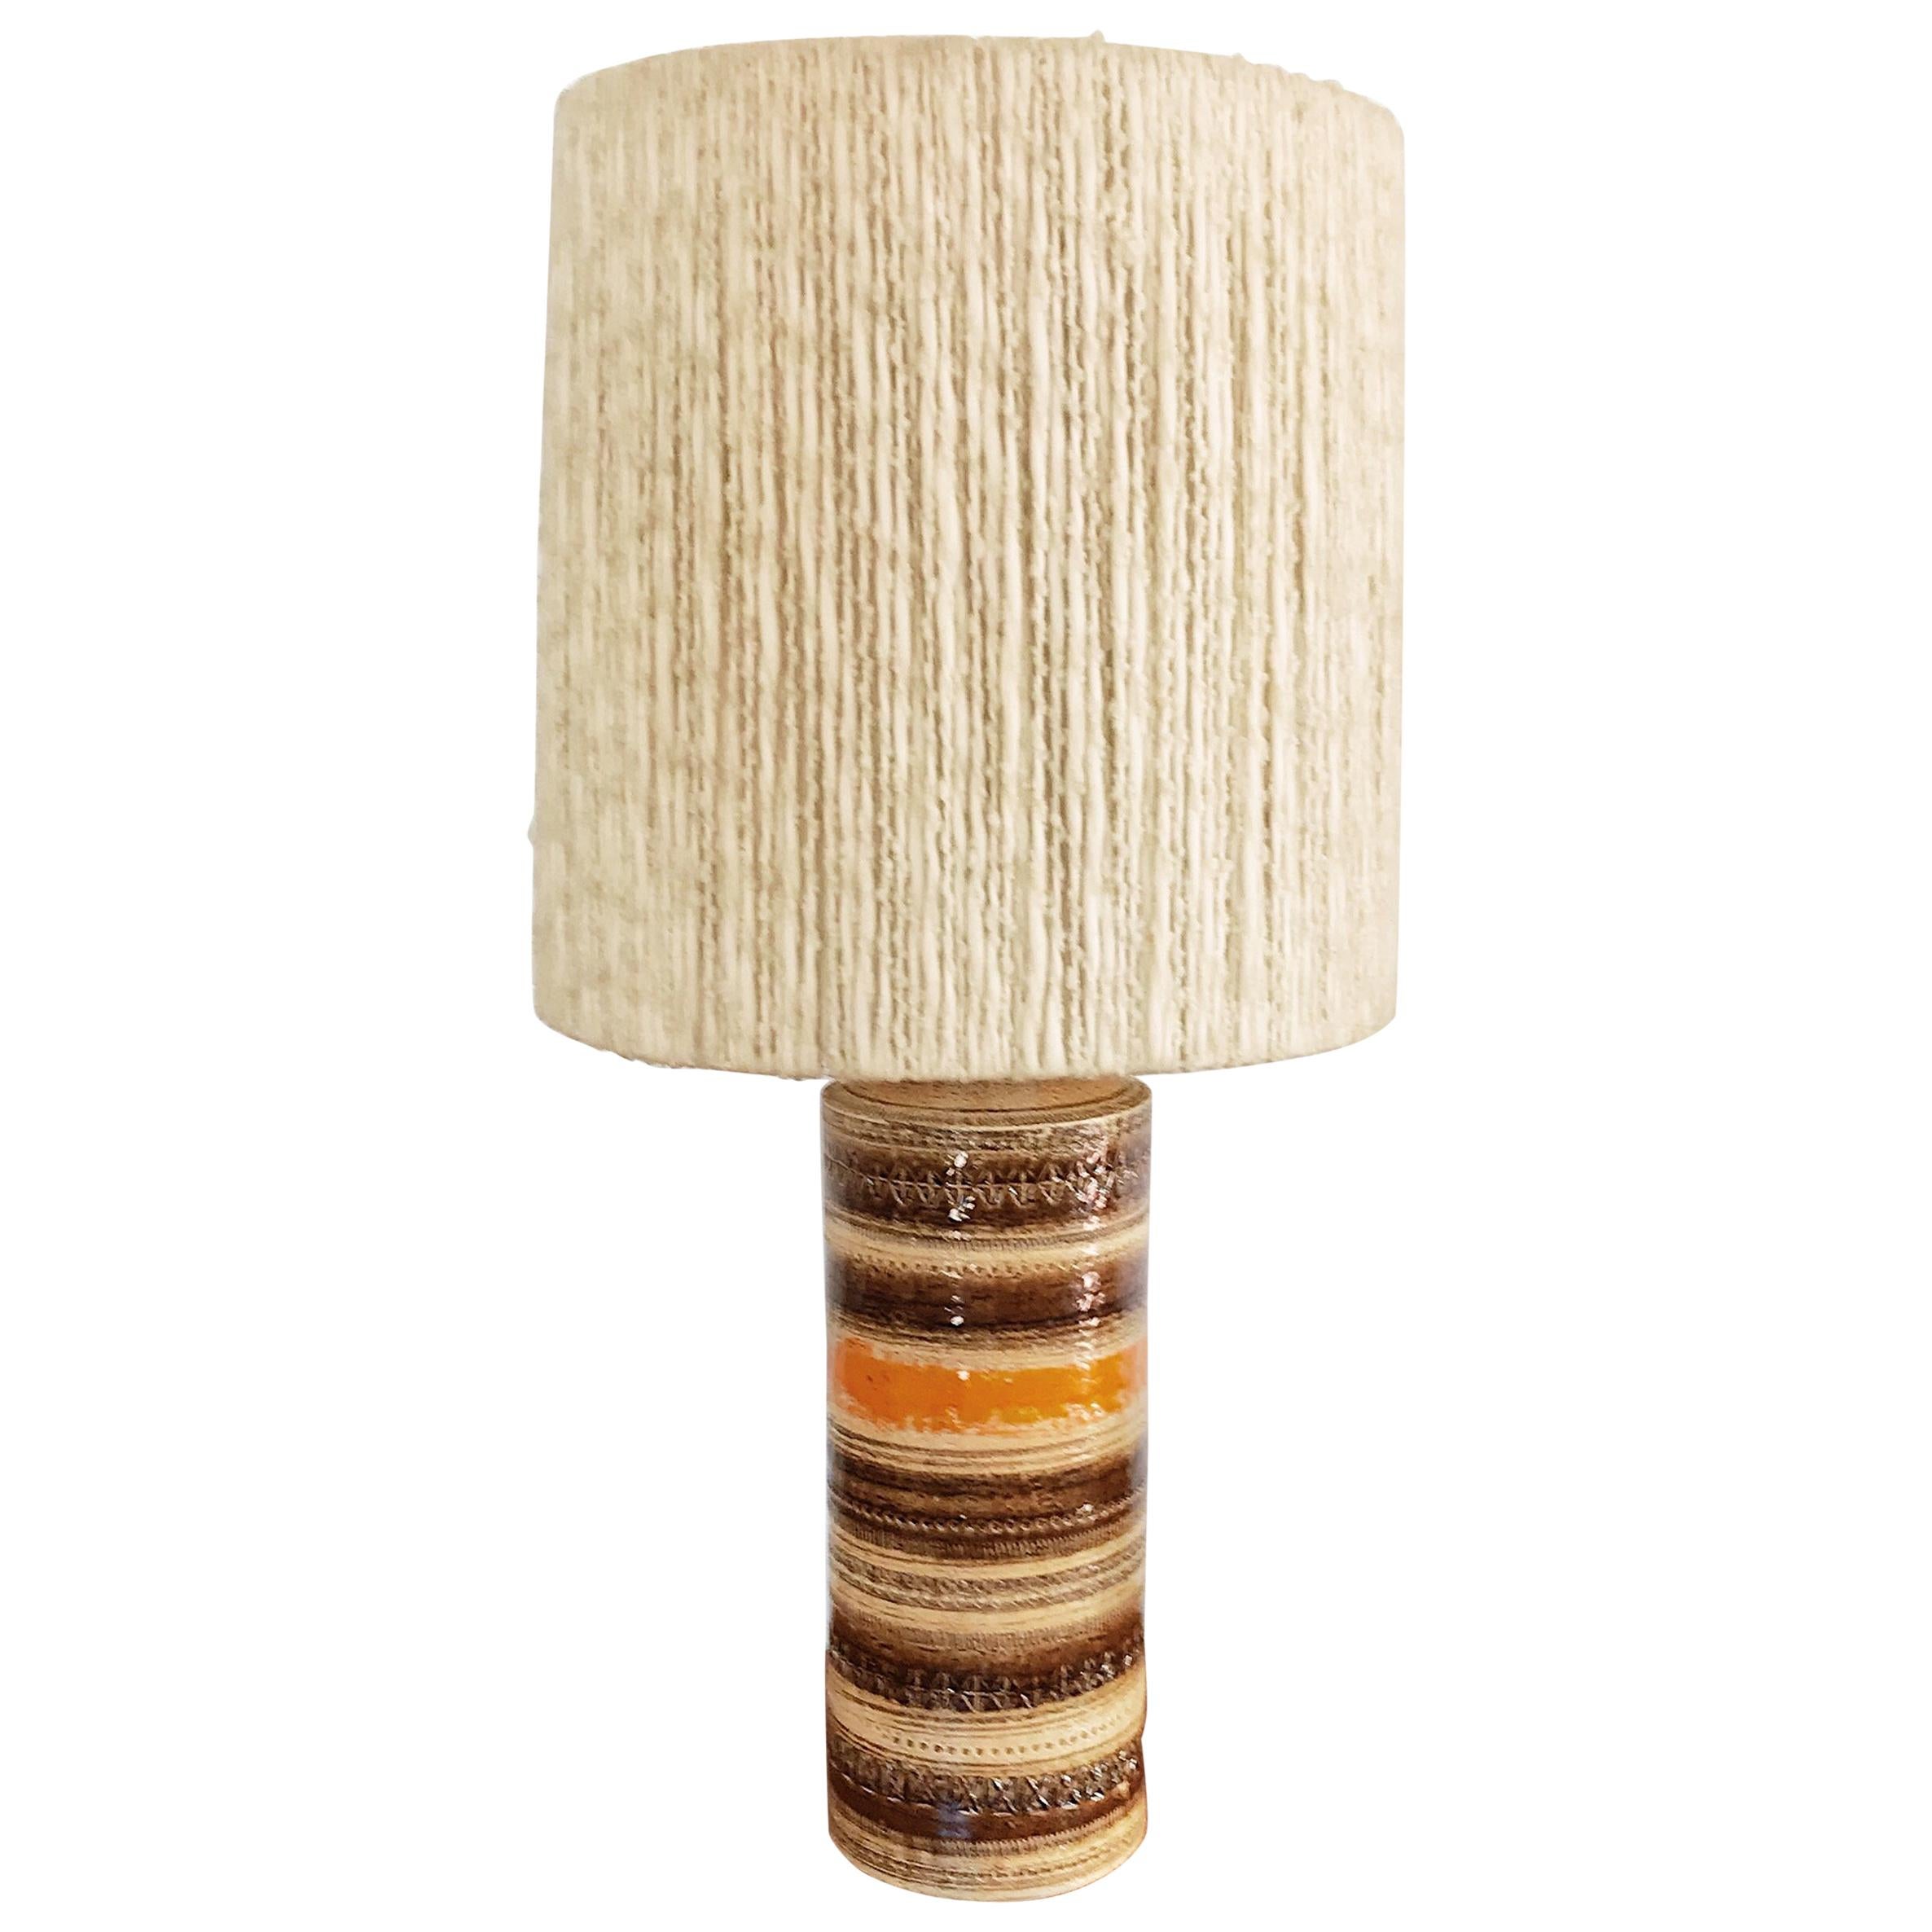 Large Sahara Glaze Bitossi Lamp with Impressed Ramini Decor and Wool Drum Shade For Sale